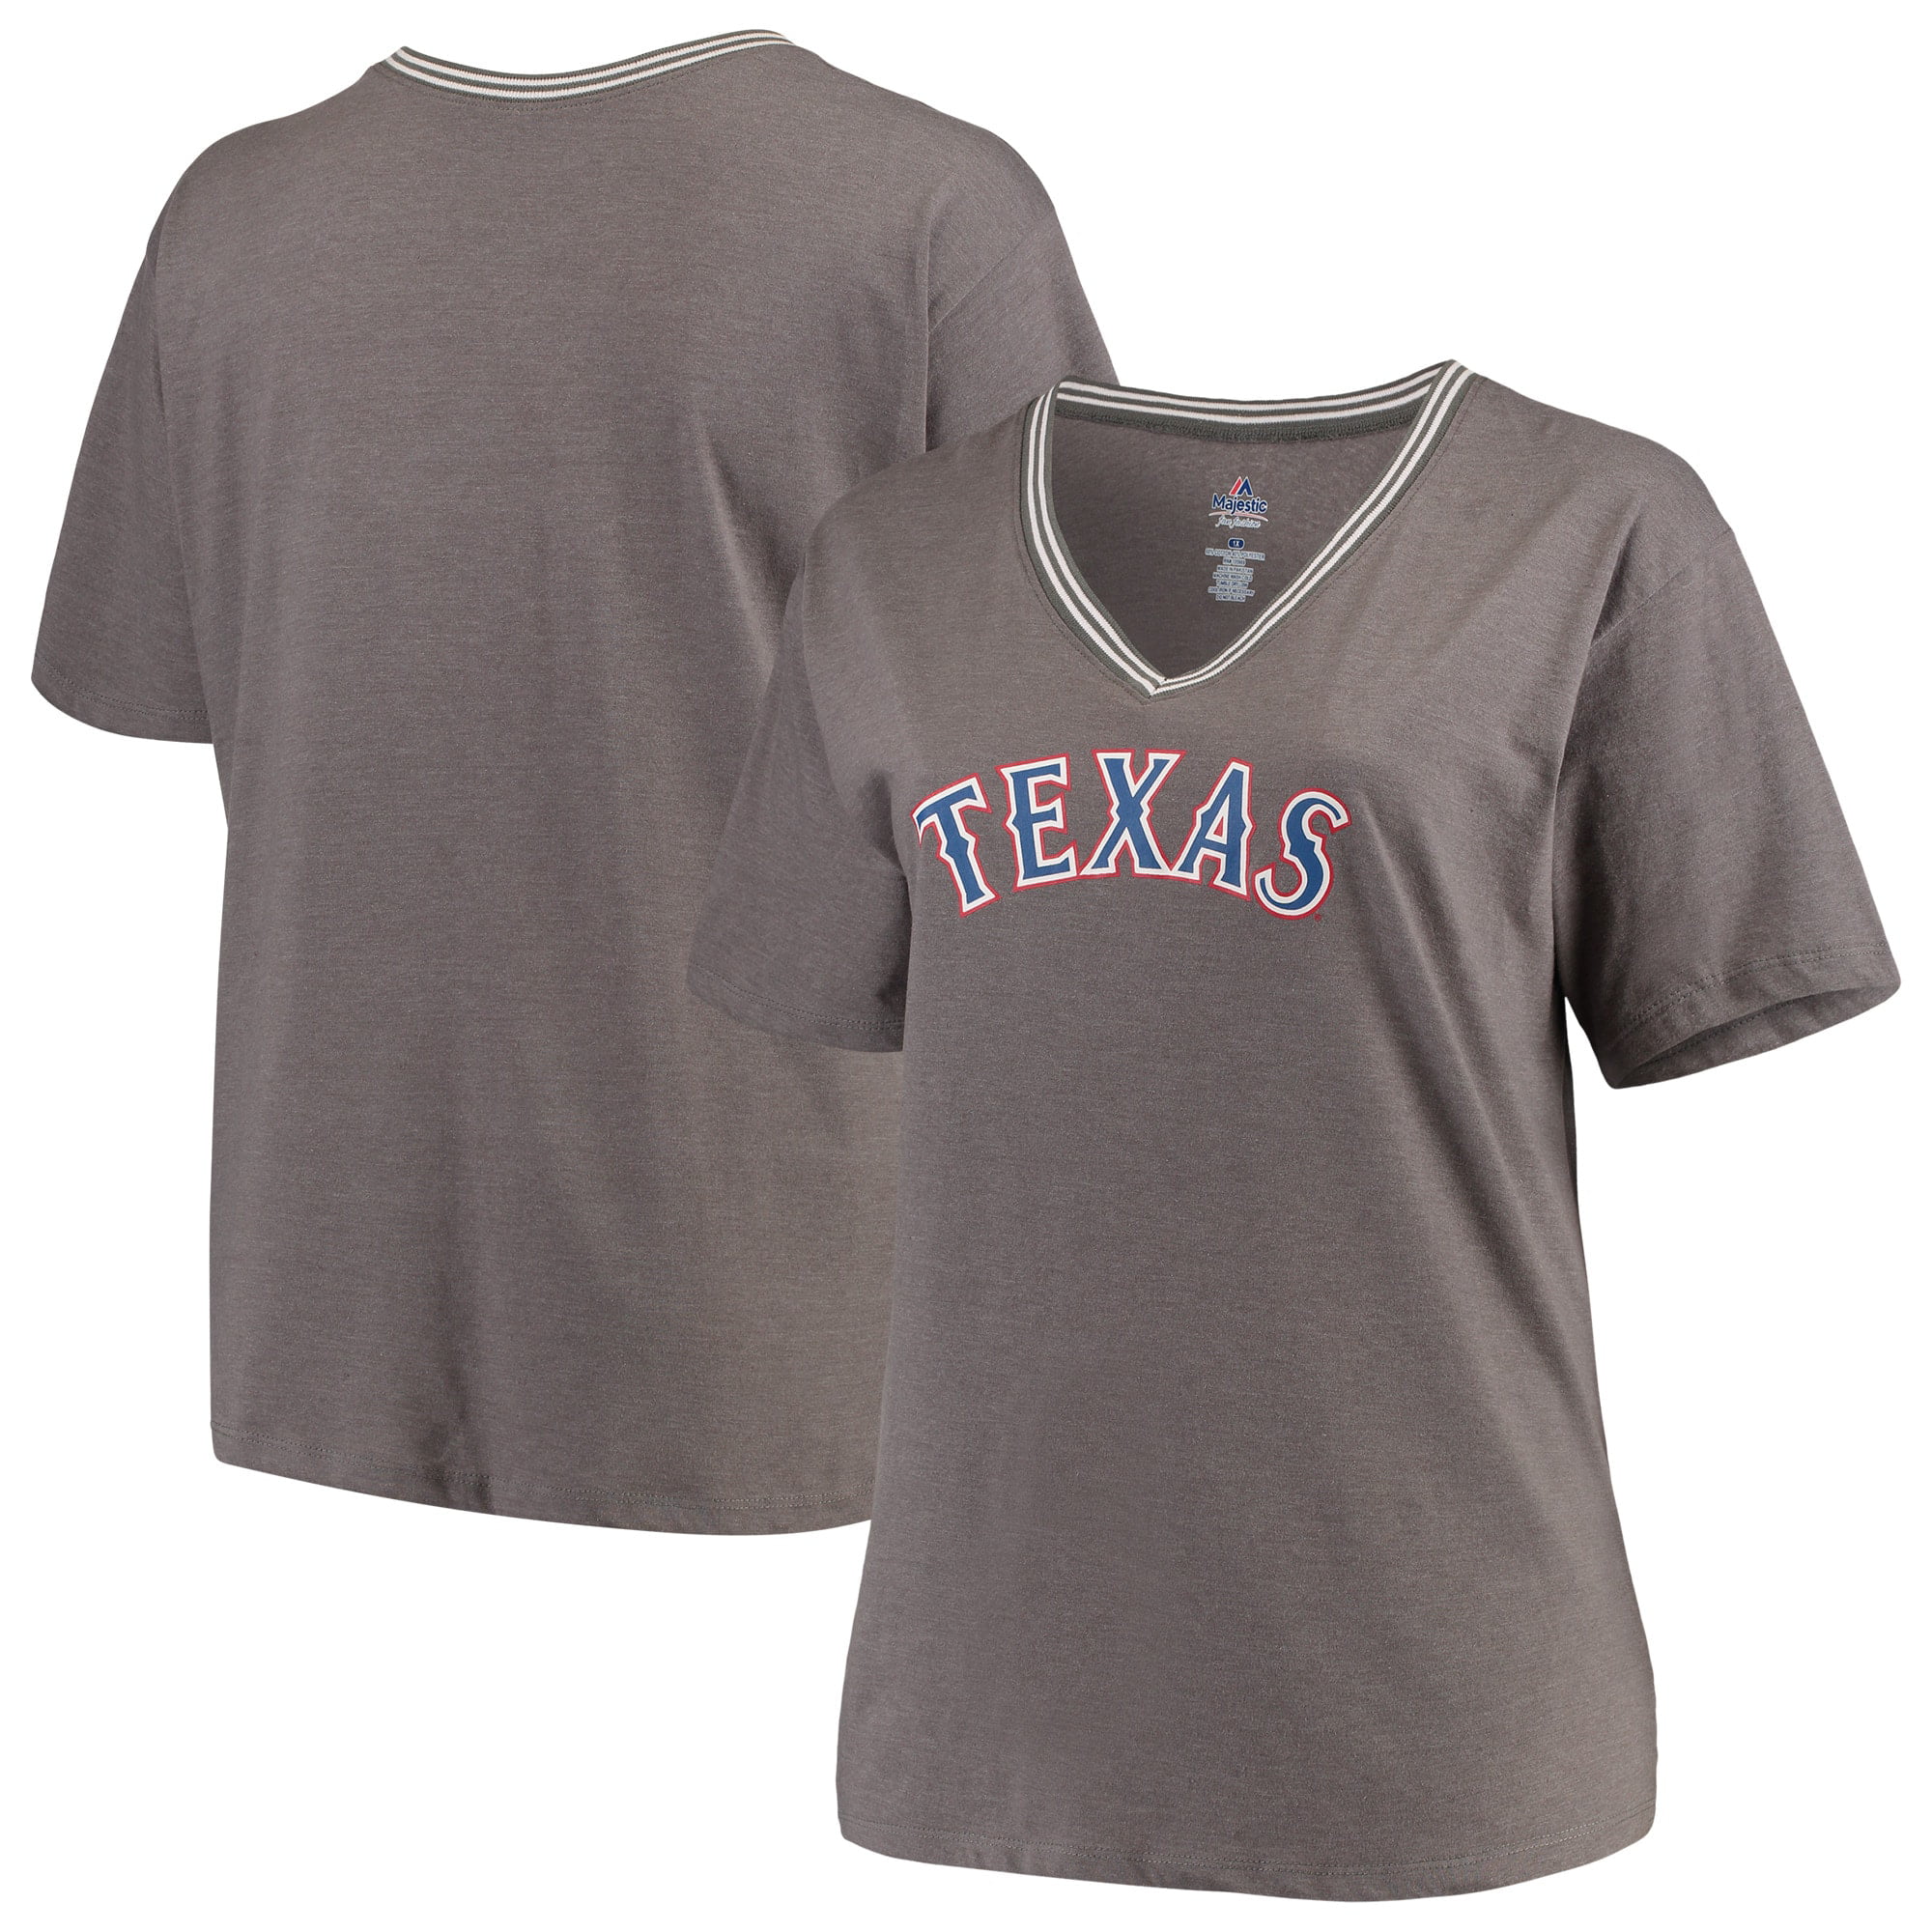 plus size women's texas rangers shirts